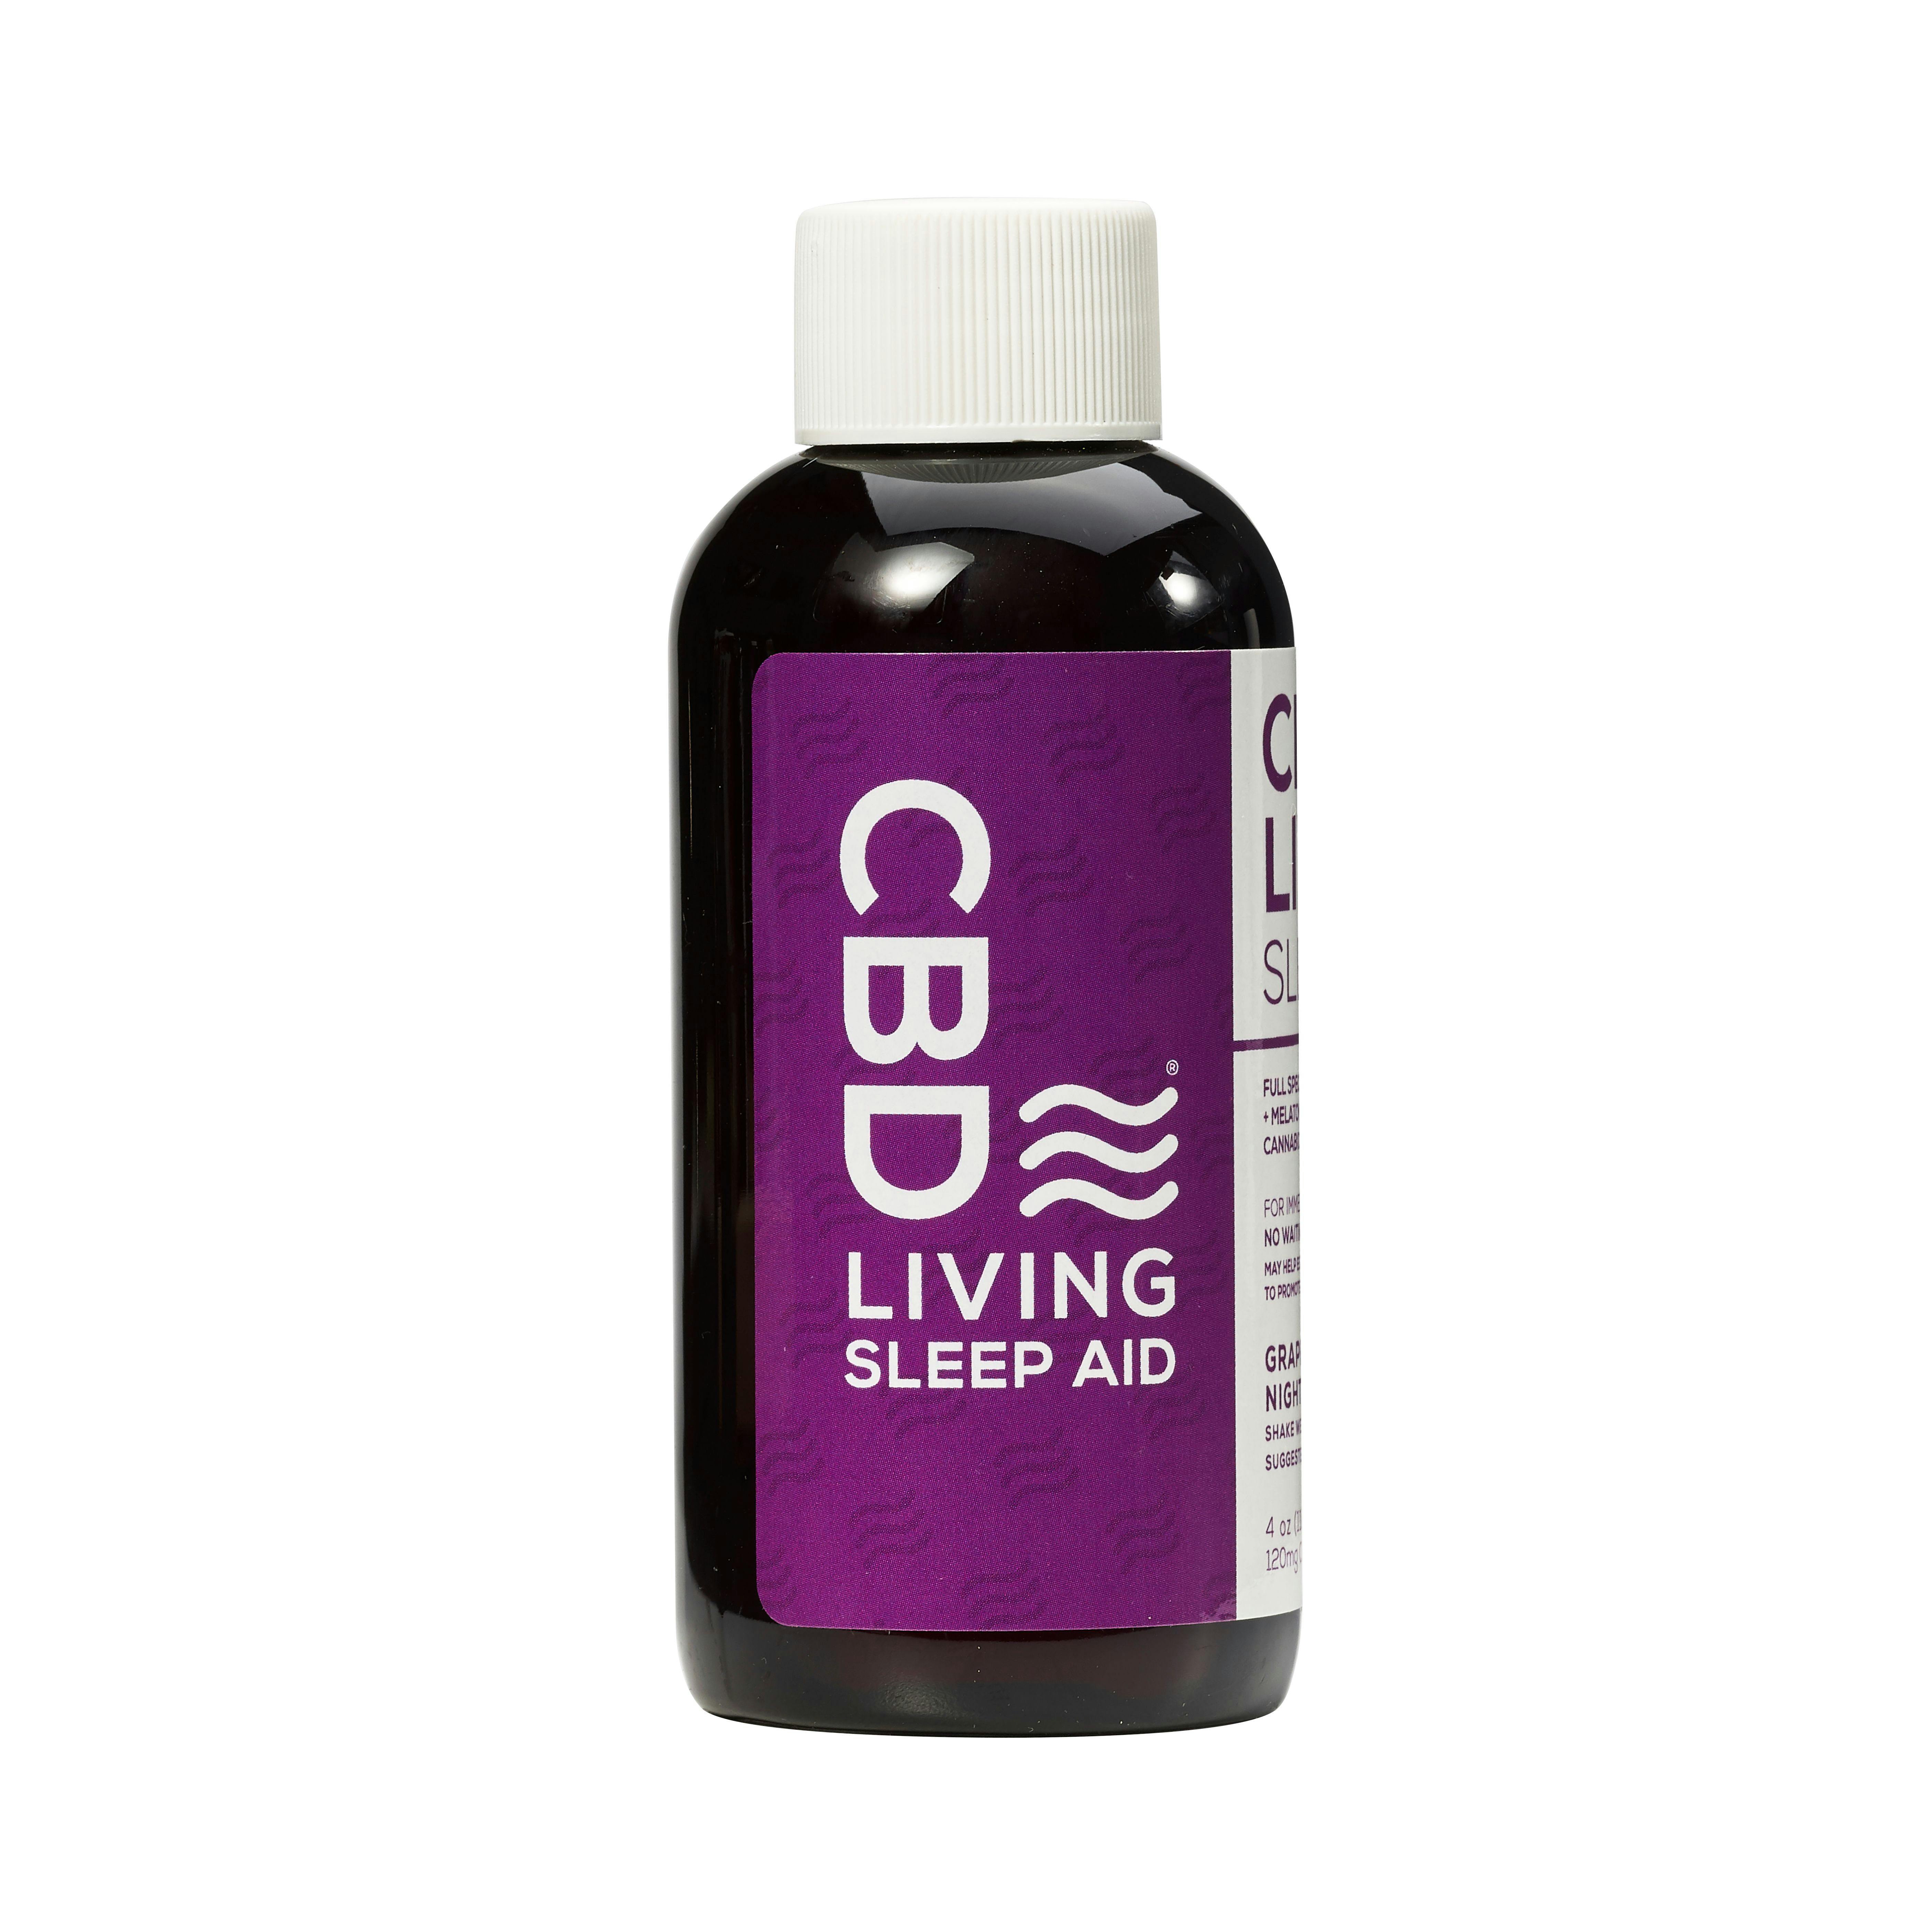 Cbd living sleep aid reviews